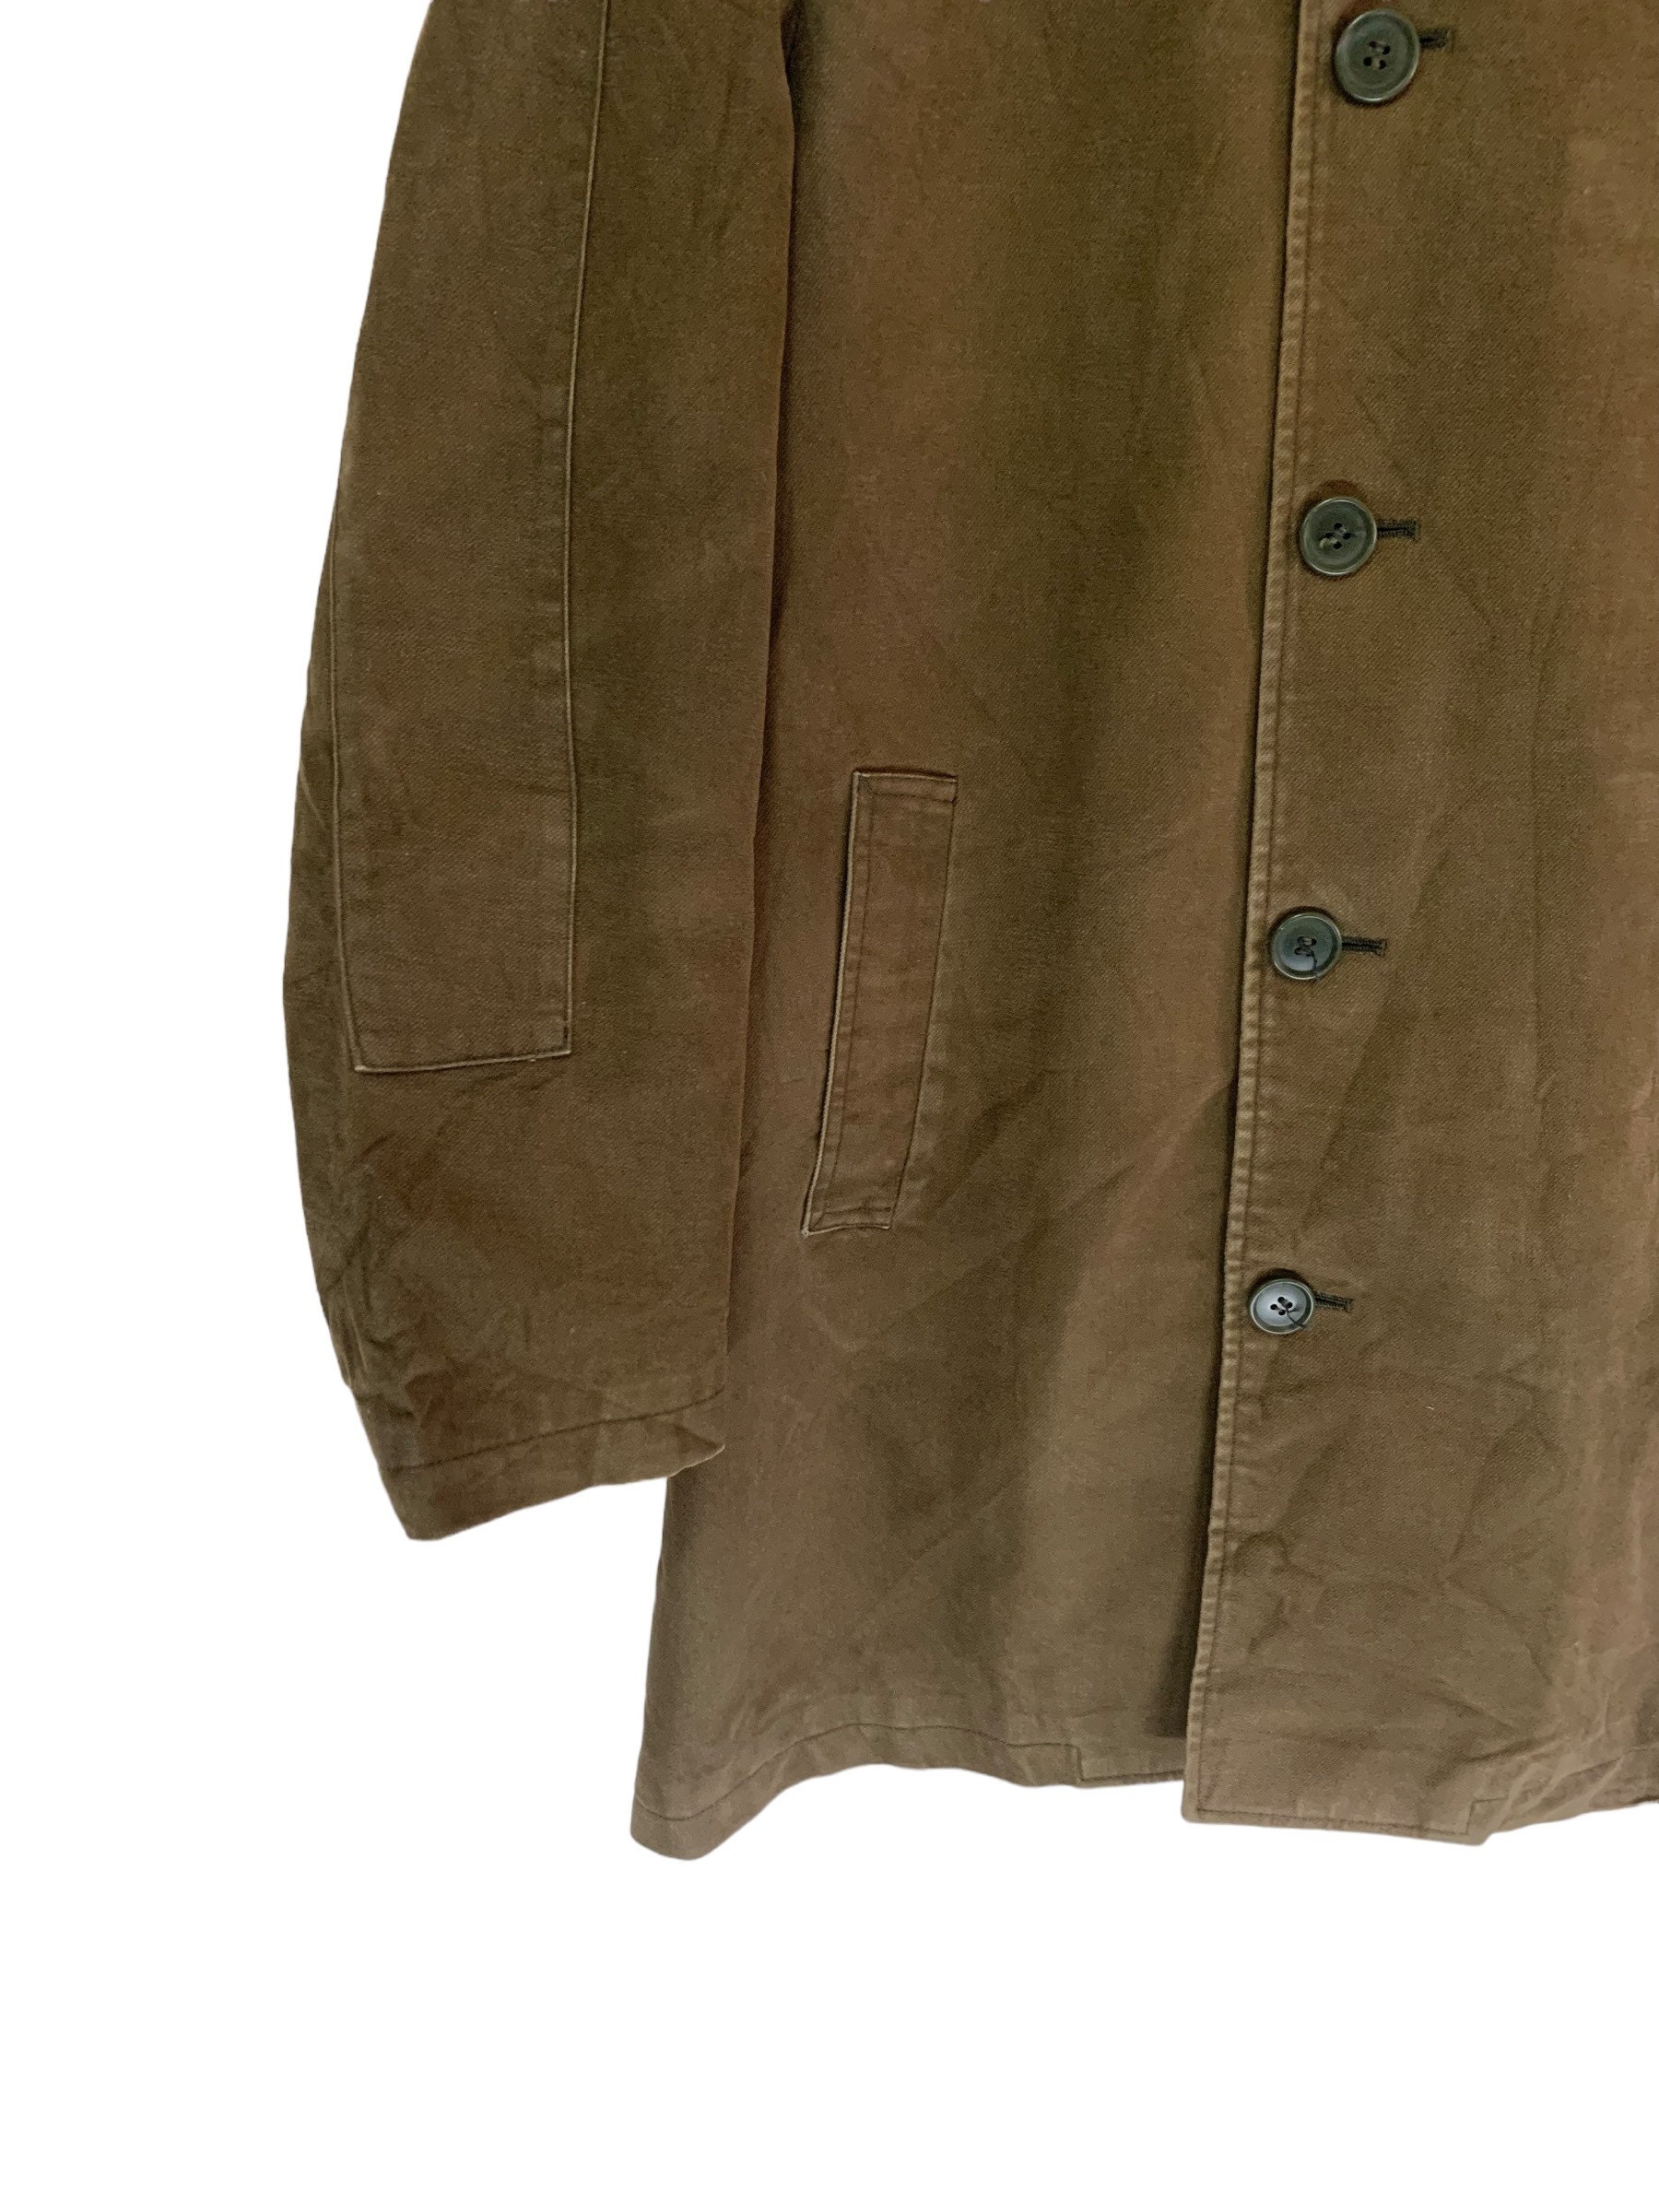 Vintage Hamnett Coat Rare Design Military Style Medium Size - Etsy